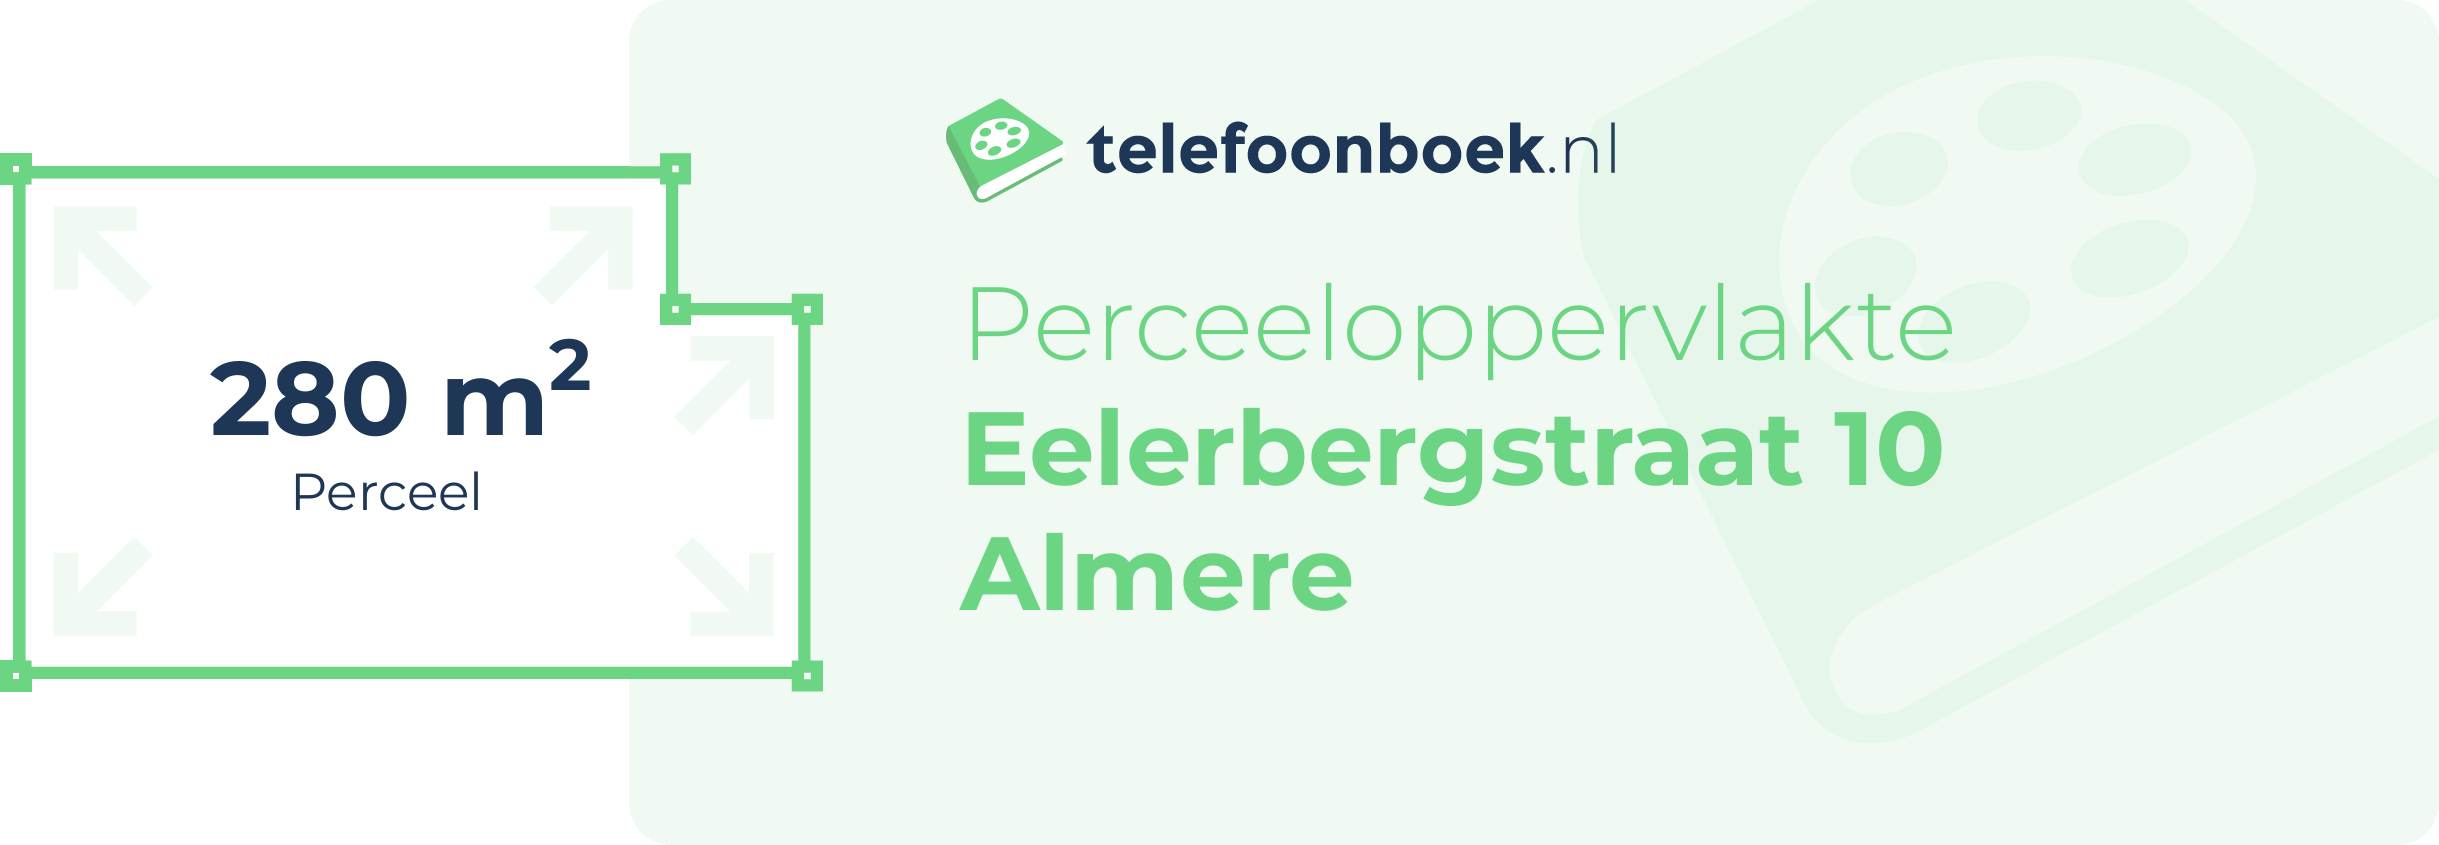 Perceeloppervlakte Eelerbergstraat 10 Almere